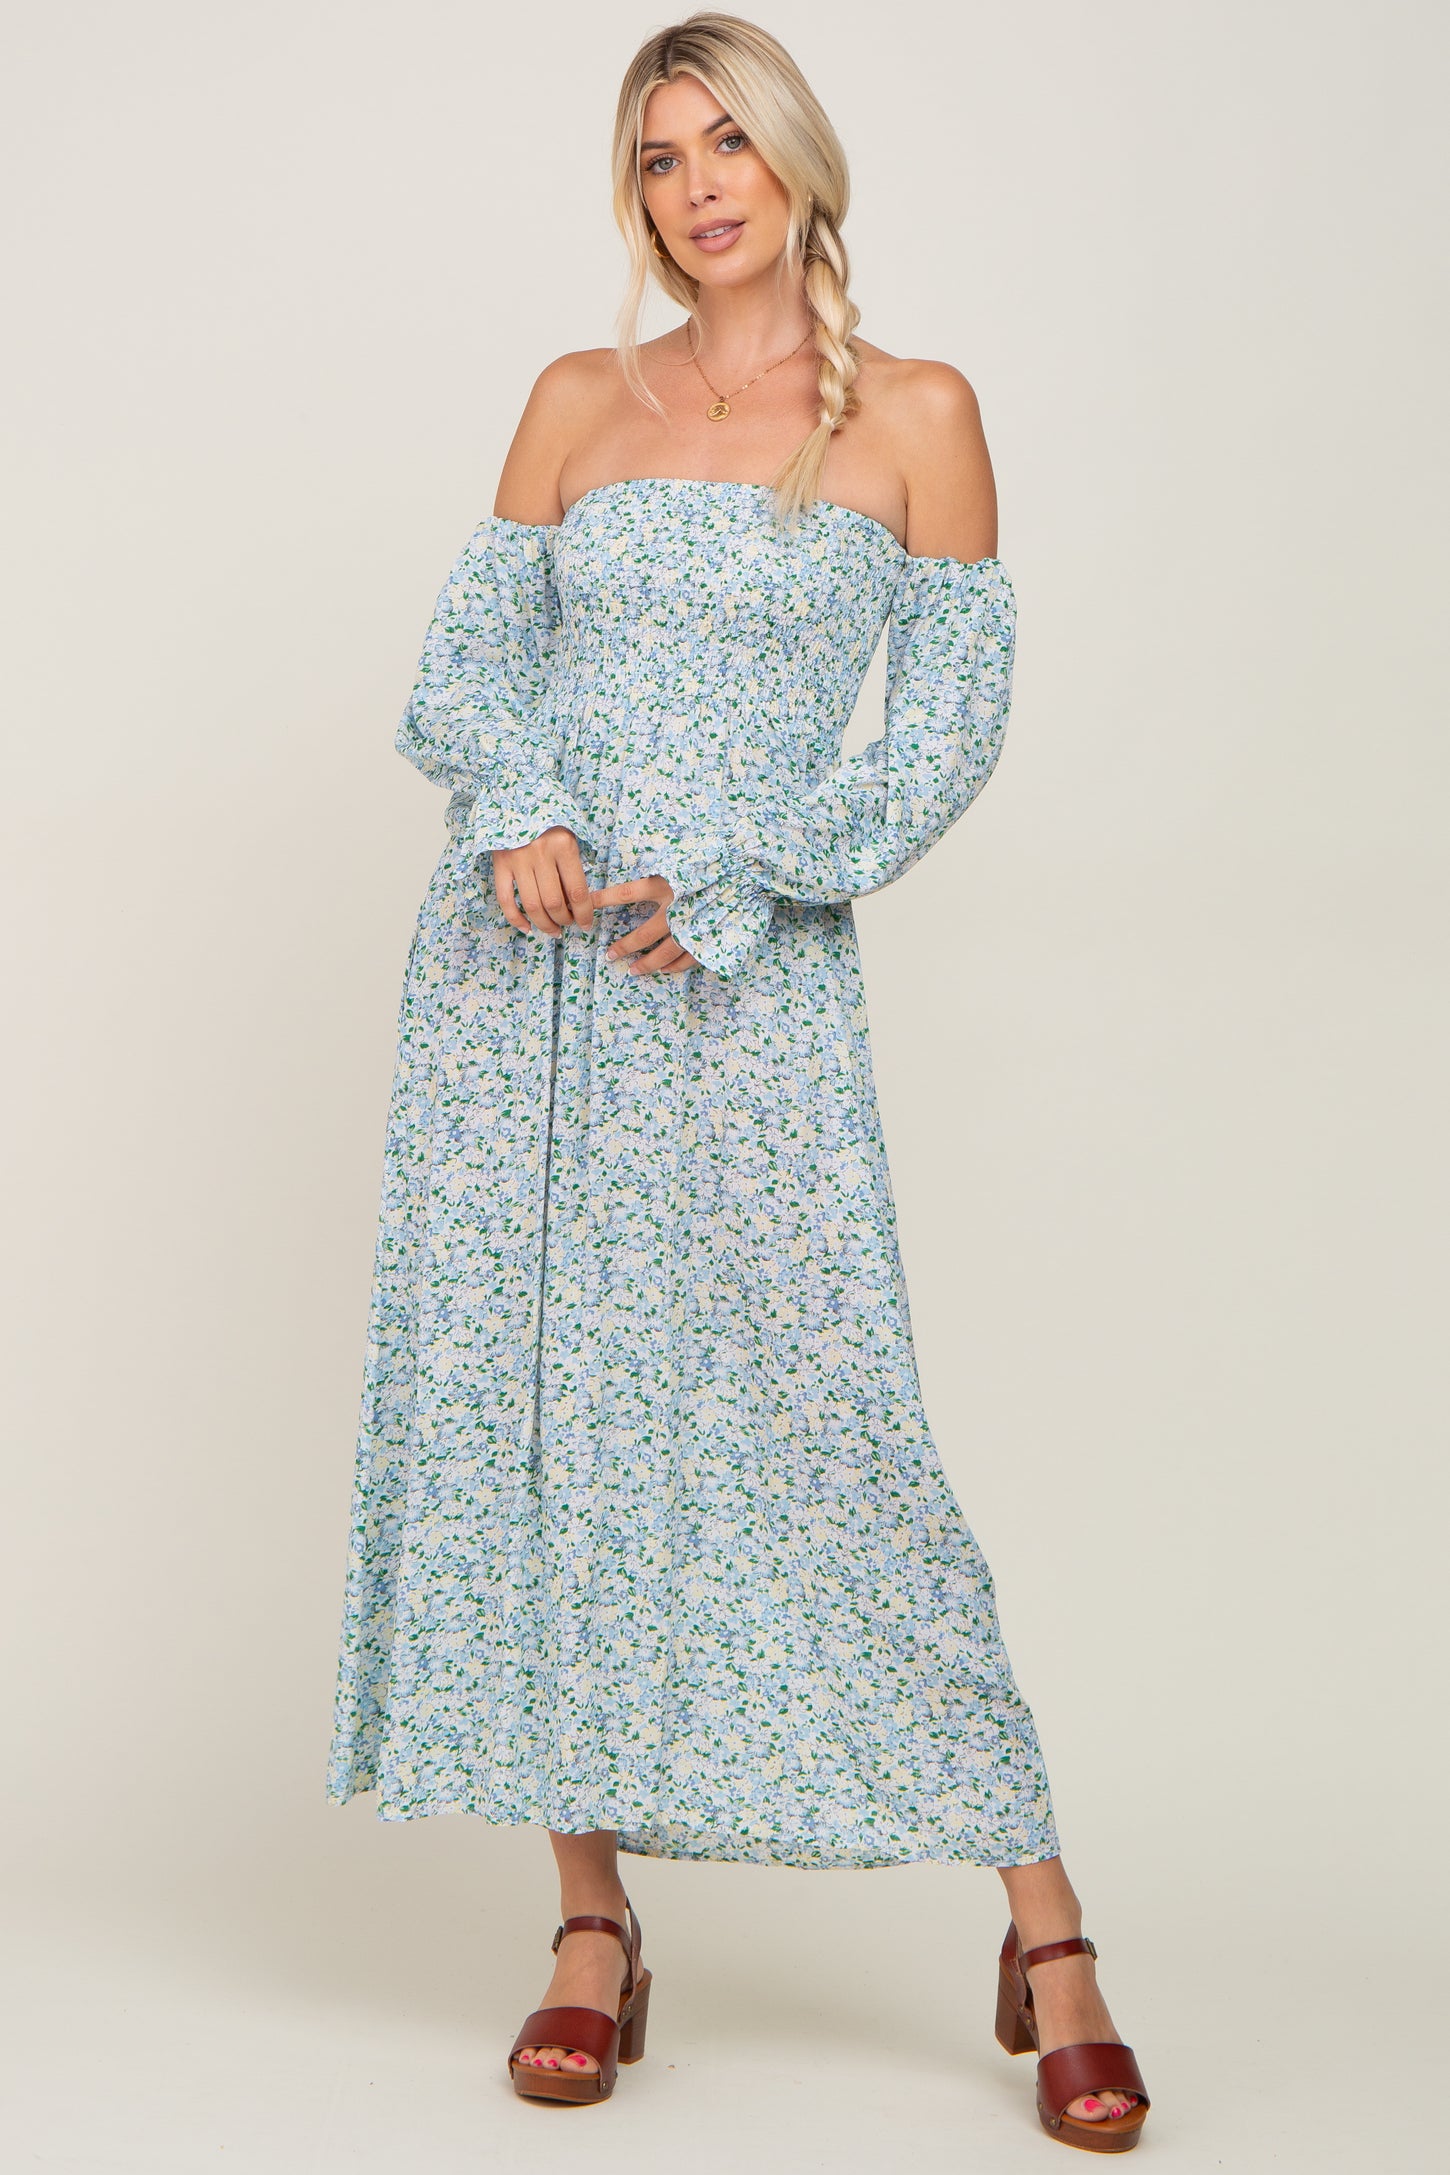 Light Blue Floral Off Shoulder Long Sleeve Maternity Maxi Dress– PinkBlush